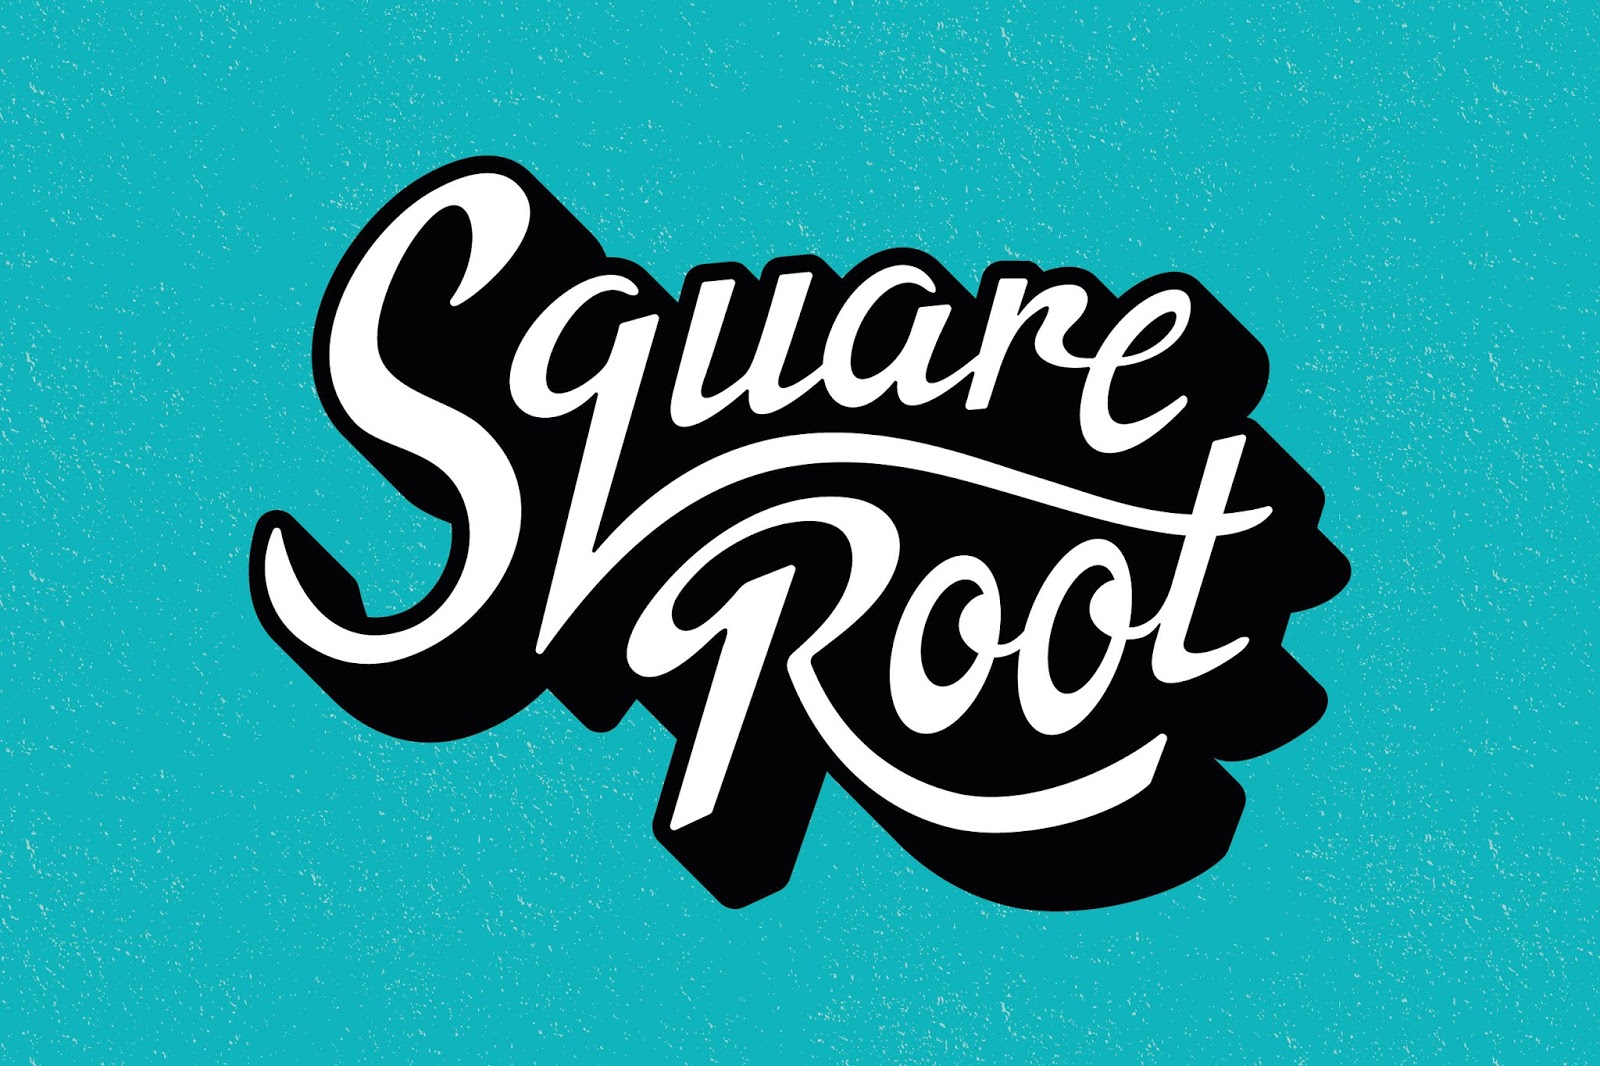 Square Root苏打水包装设计